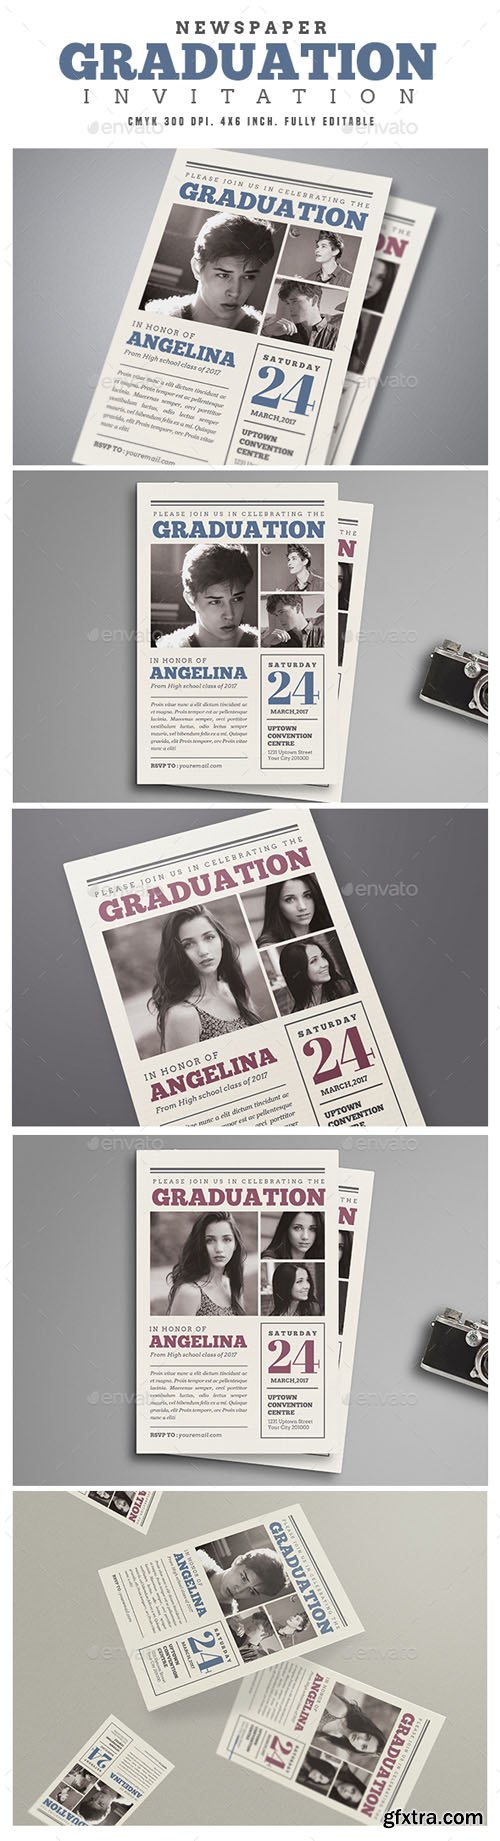 GR - Newspaper Graduation invitation 15819158